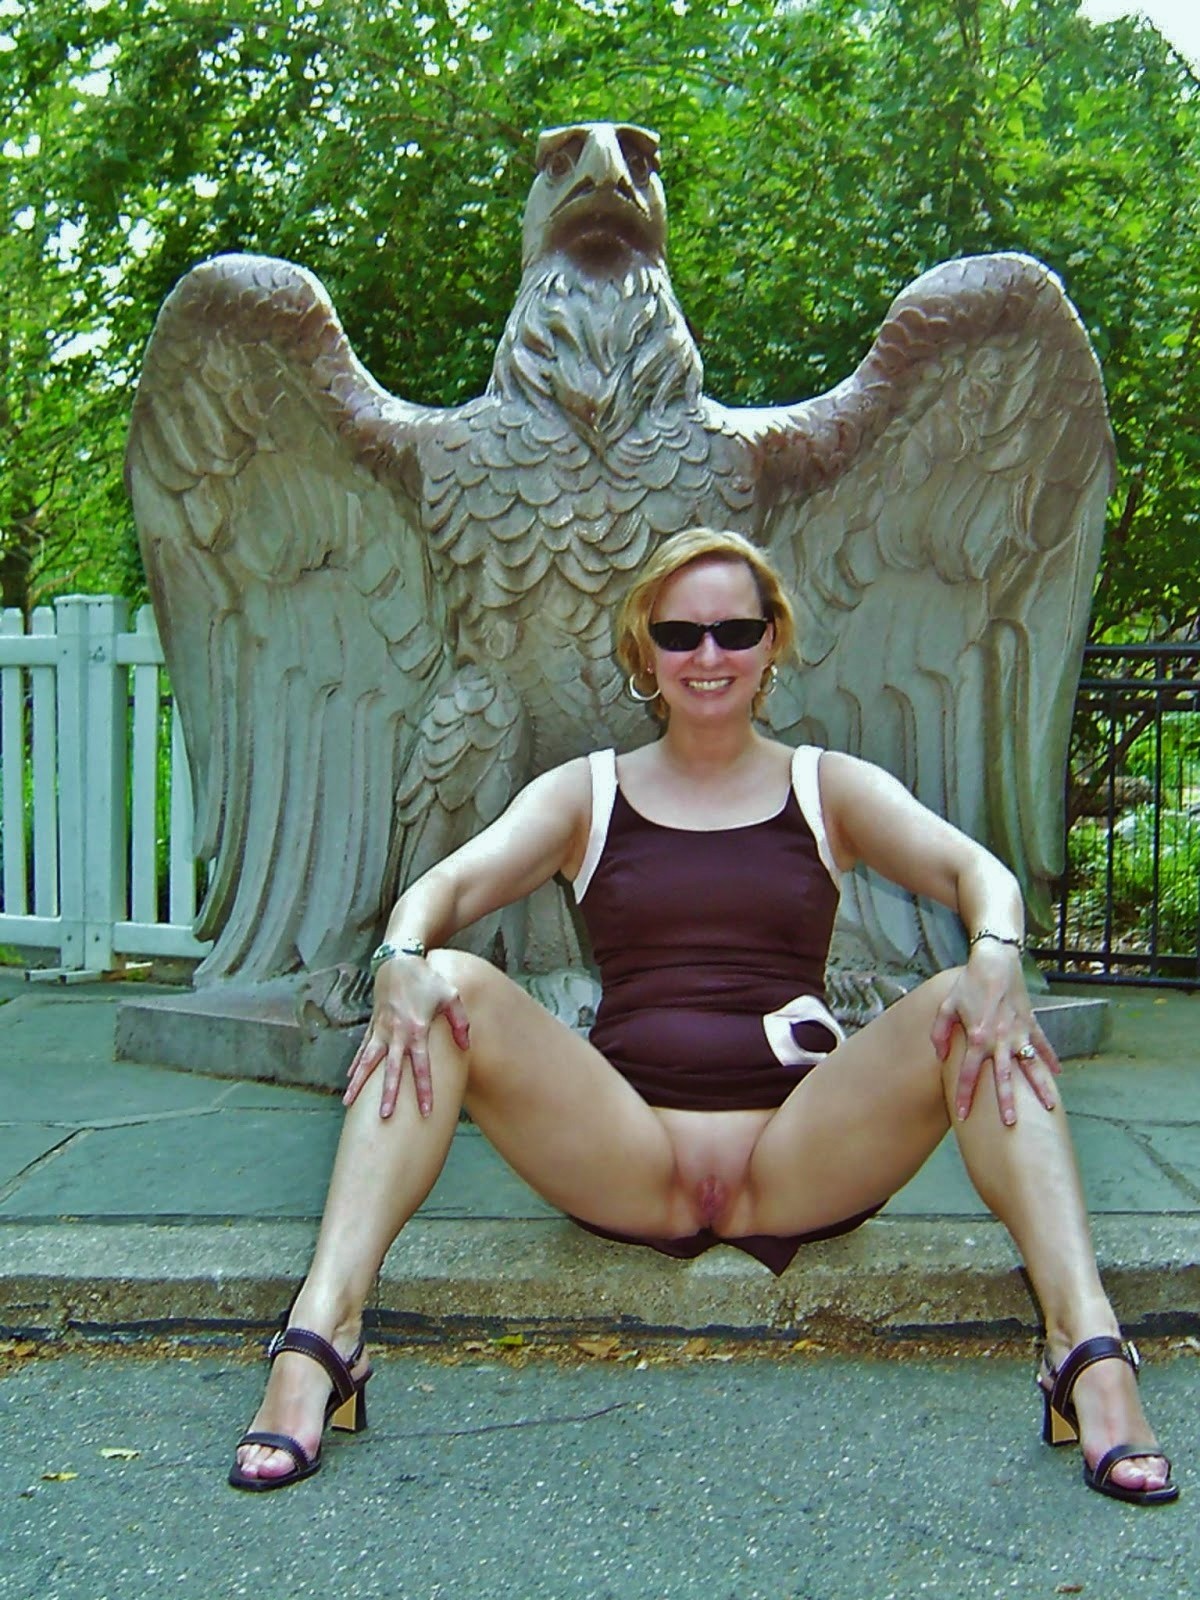 Tumblr nude girls spread eagle